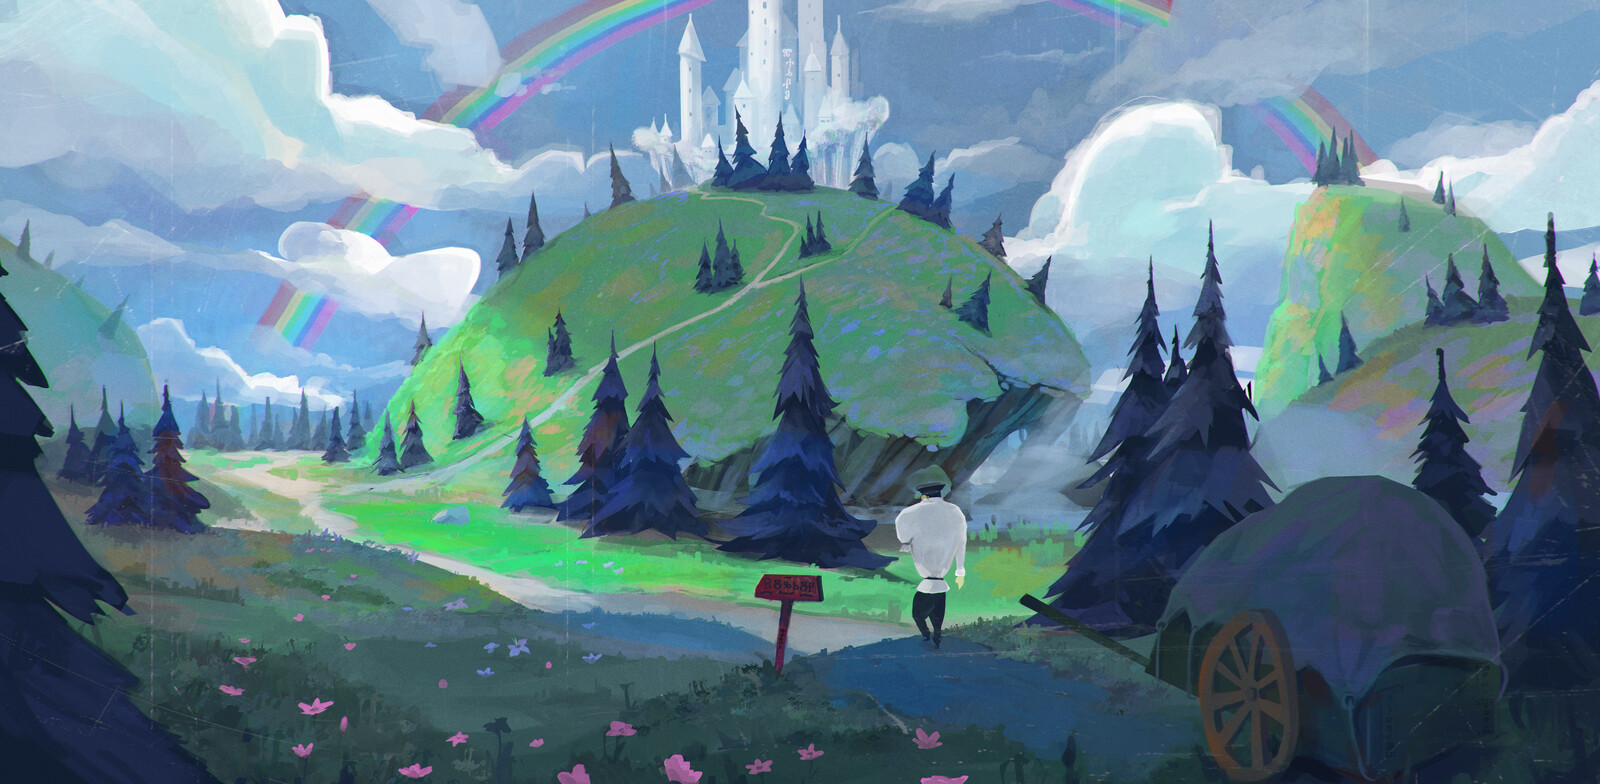 Postman and Rainbow castle